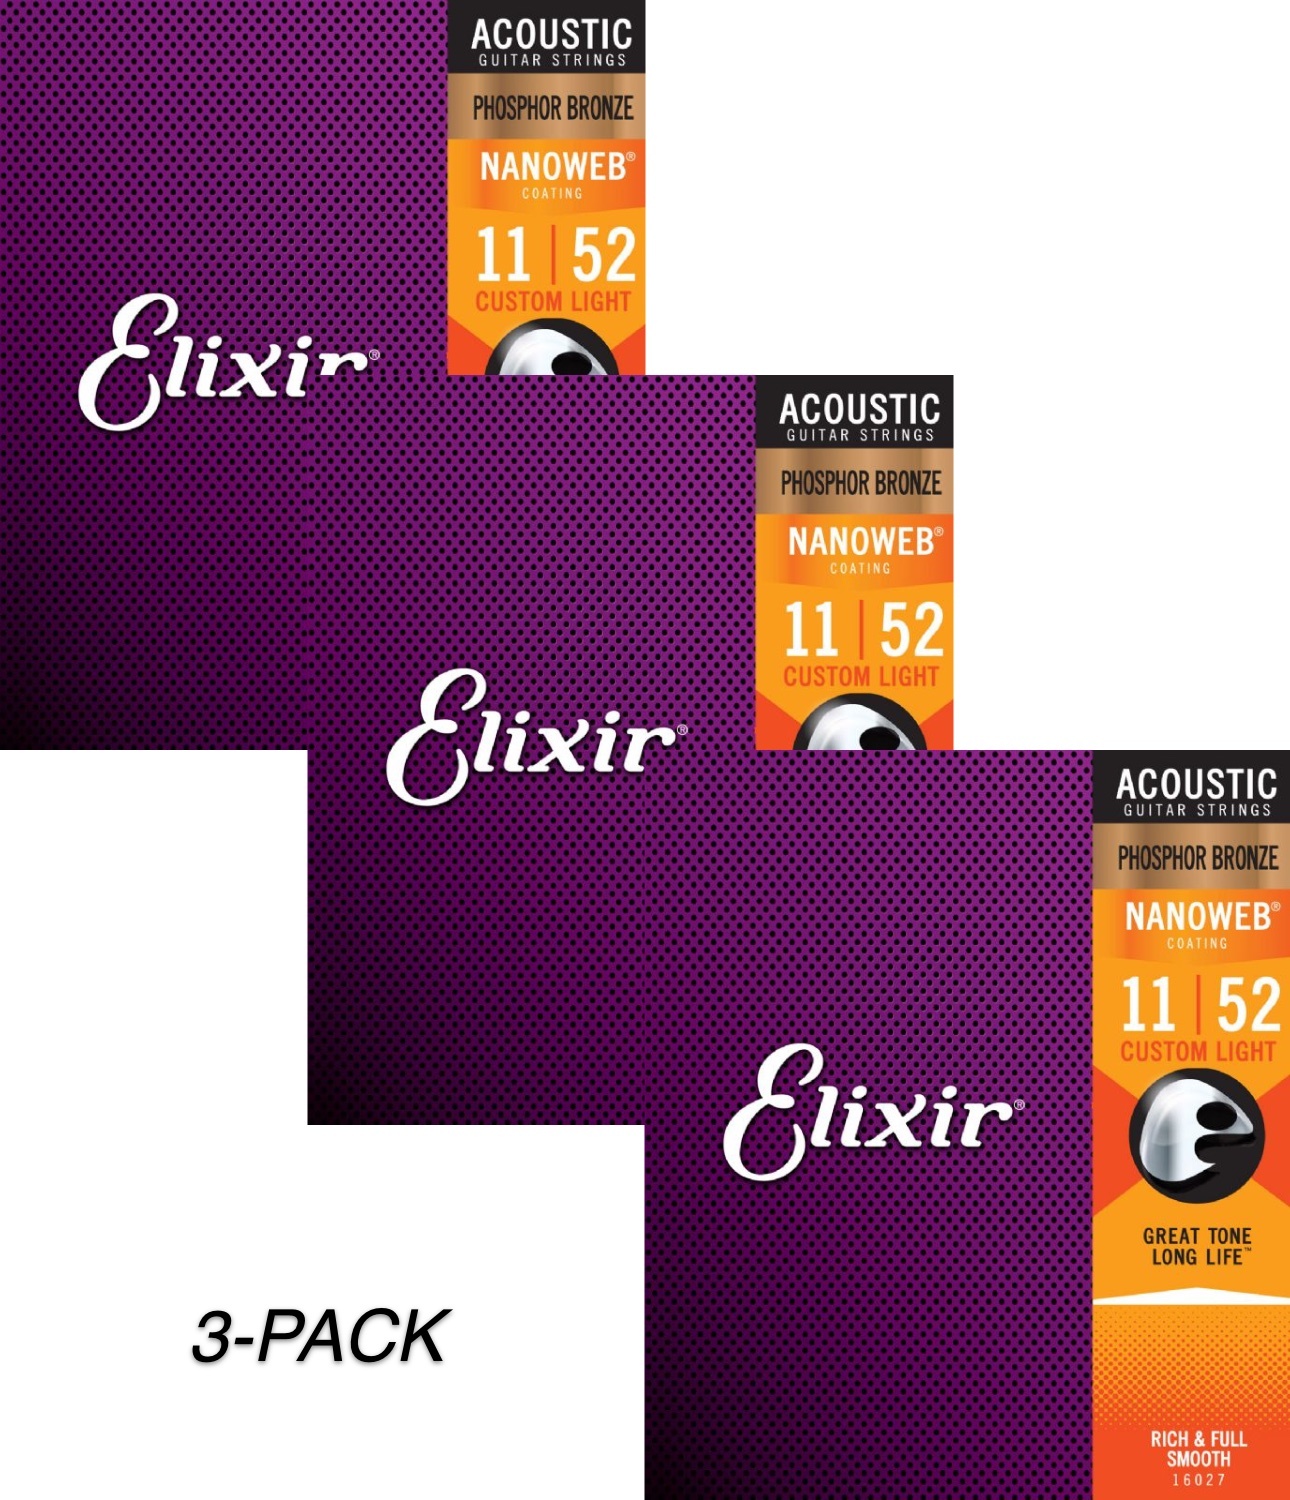 3-Pack of Elixir 16027 Phosphor Bronze Acoustic Guitar Strings with NANOWEB. Custom Light 11-52 single